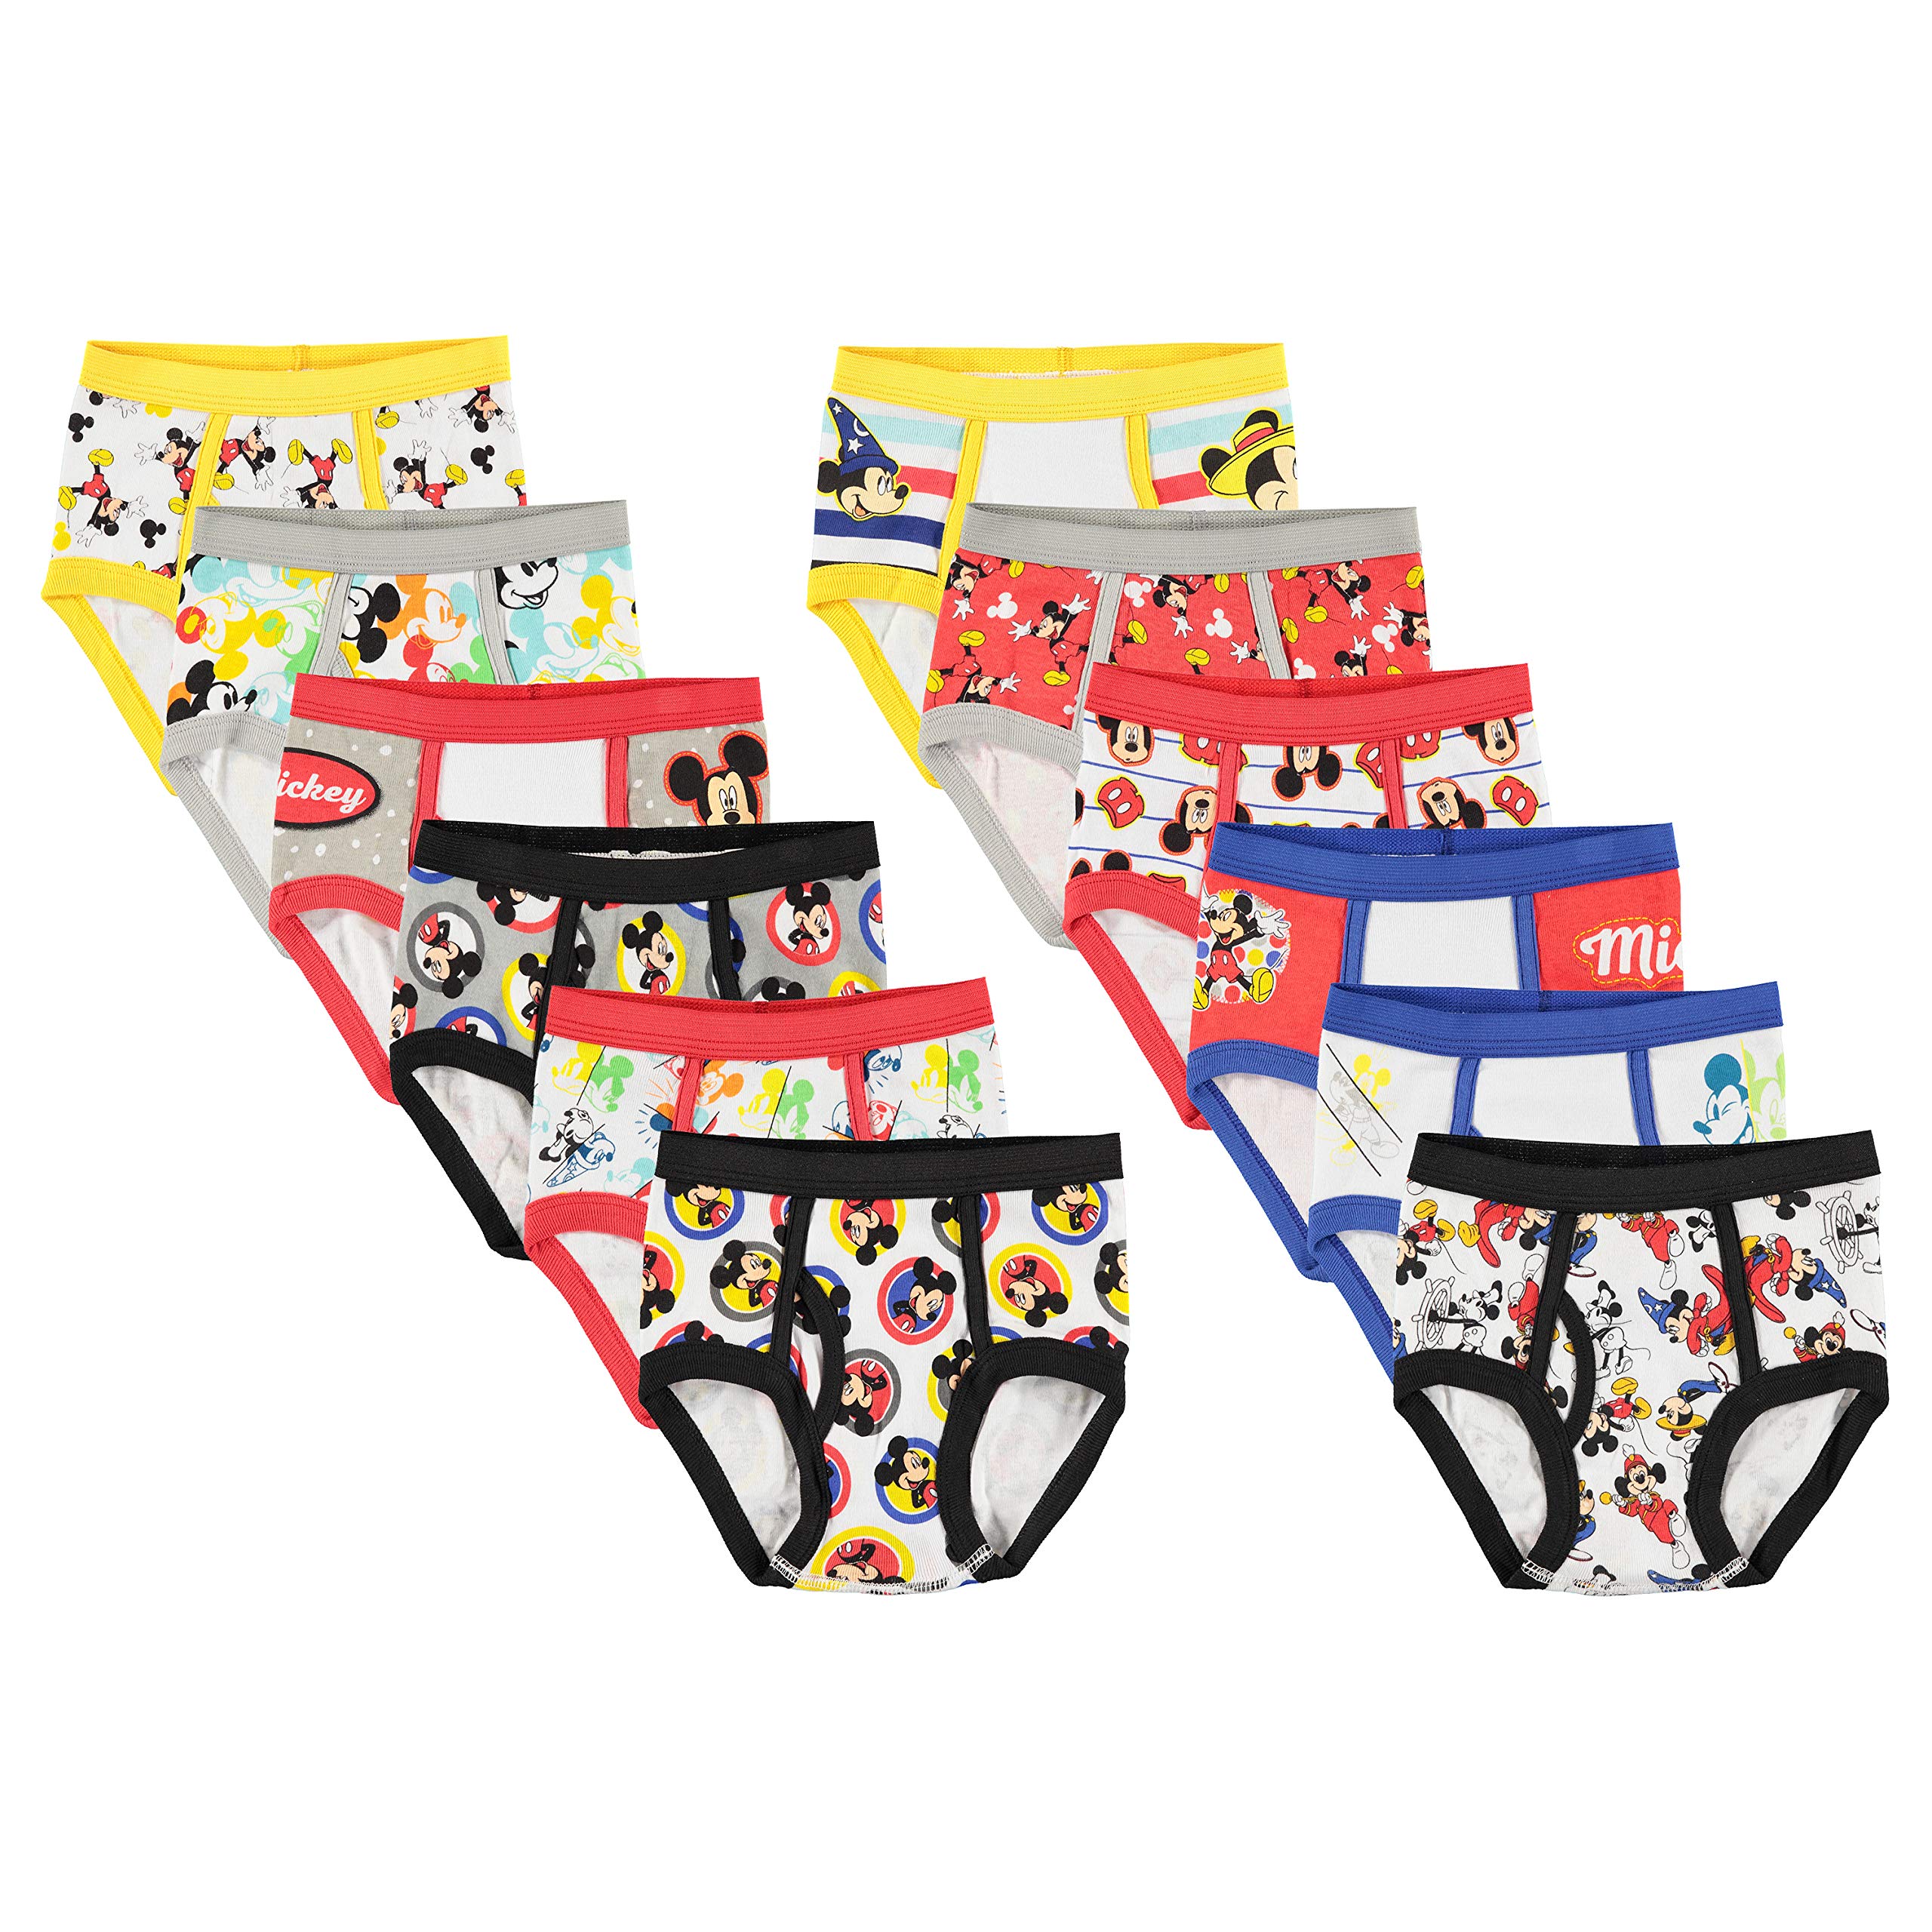 Disney Girls' Toddler Boys' Mickey Mouse 12-Days of Surprise Underwear Makes Potty Training Fun